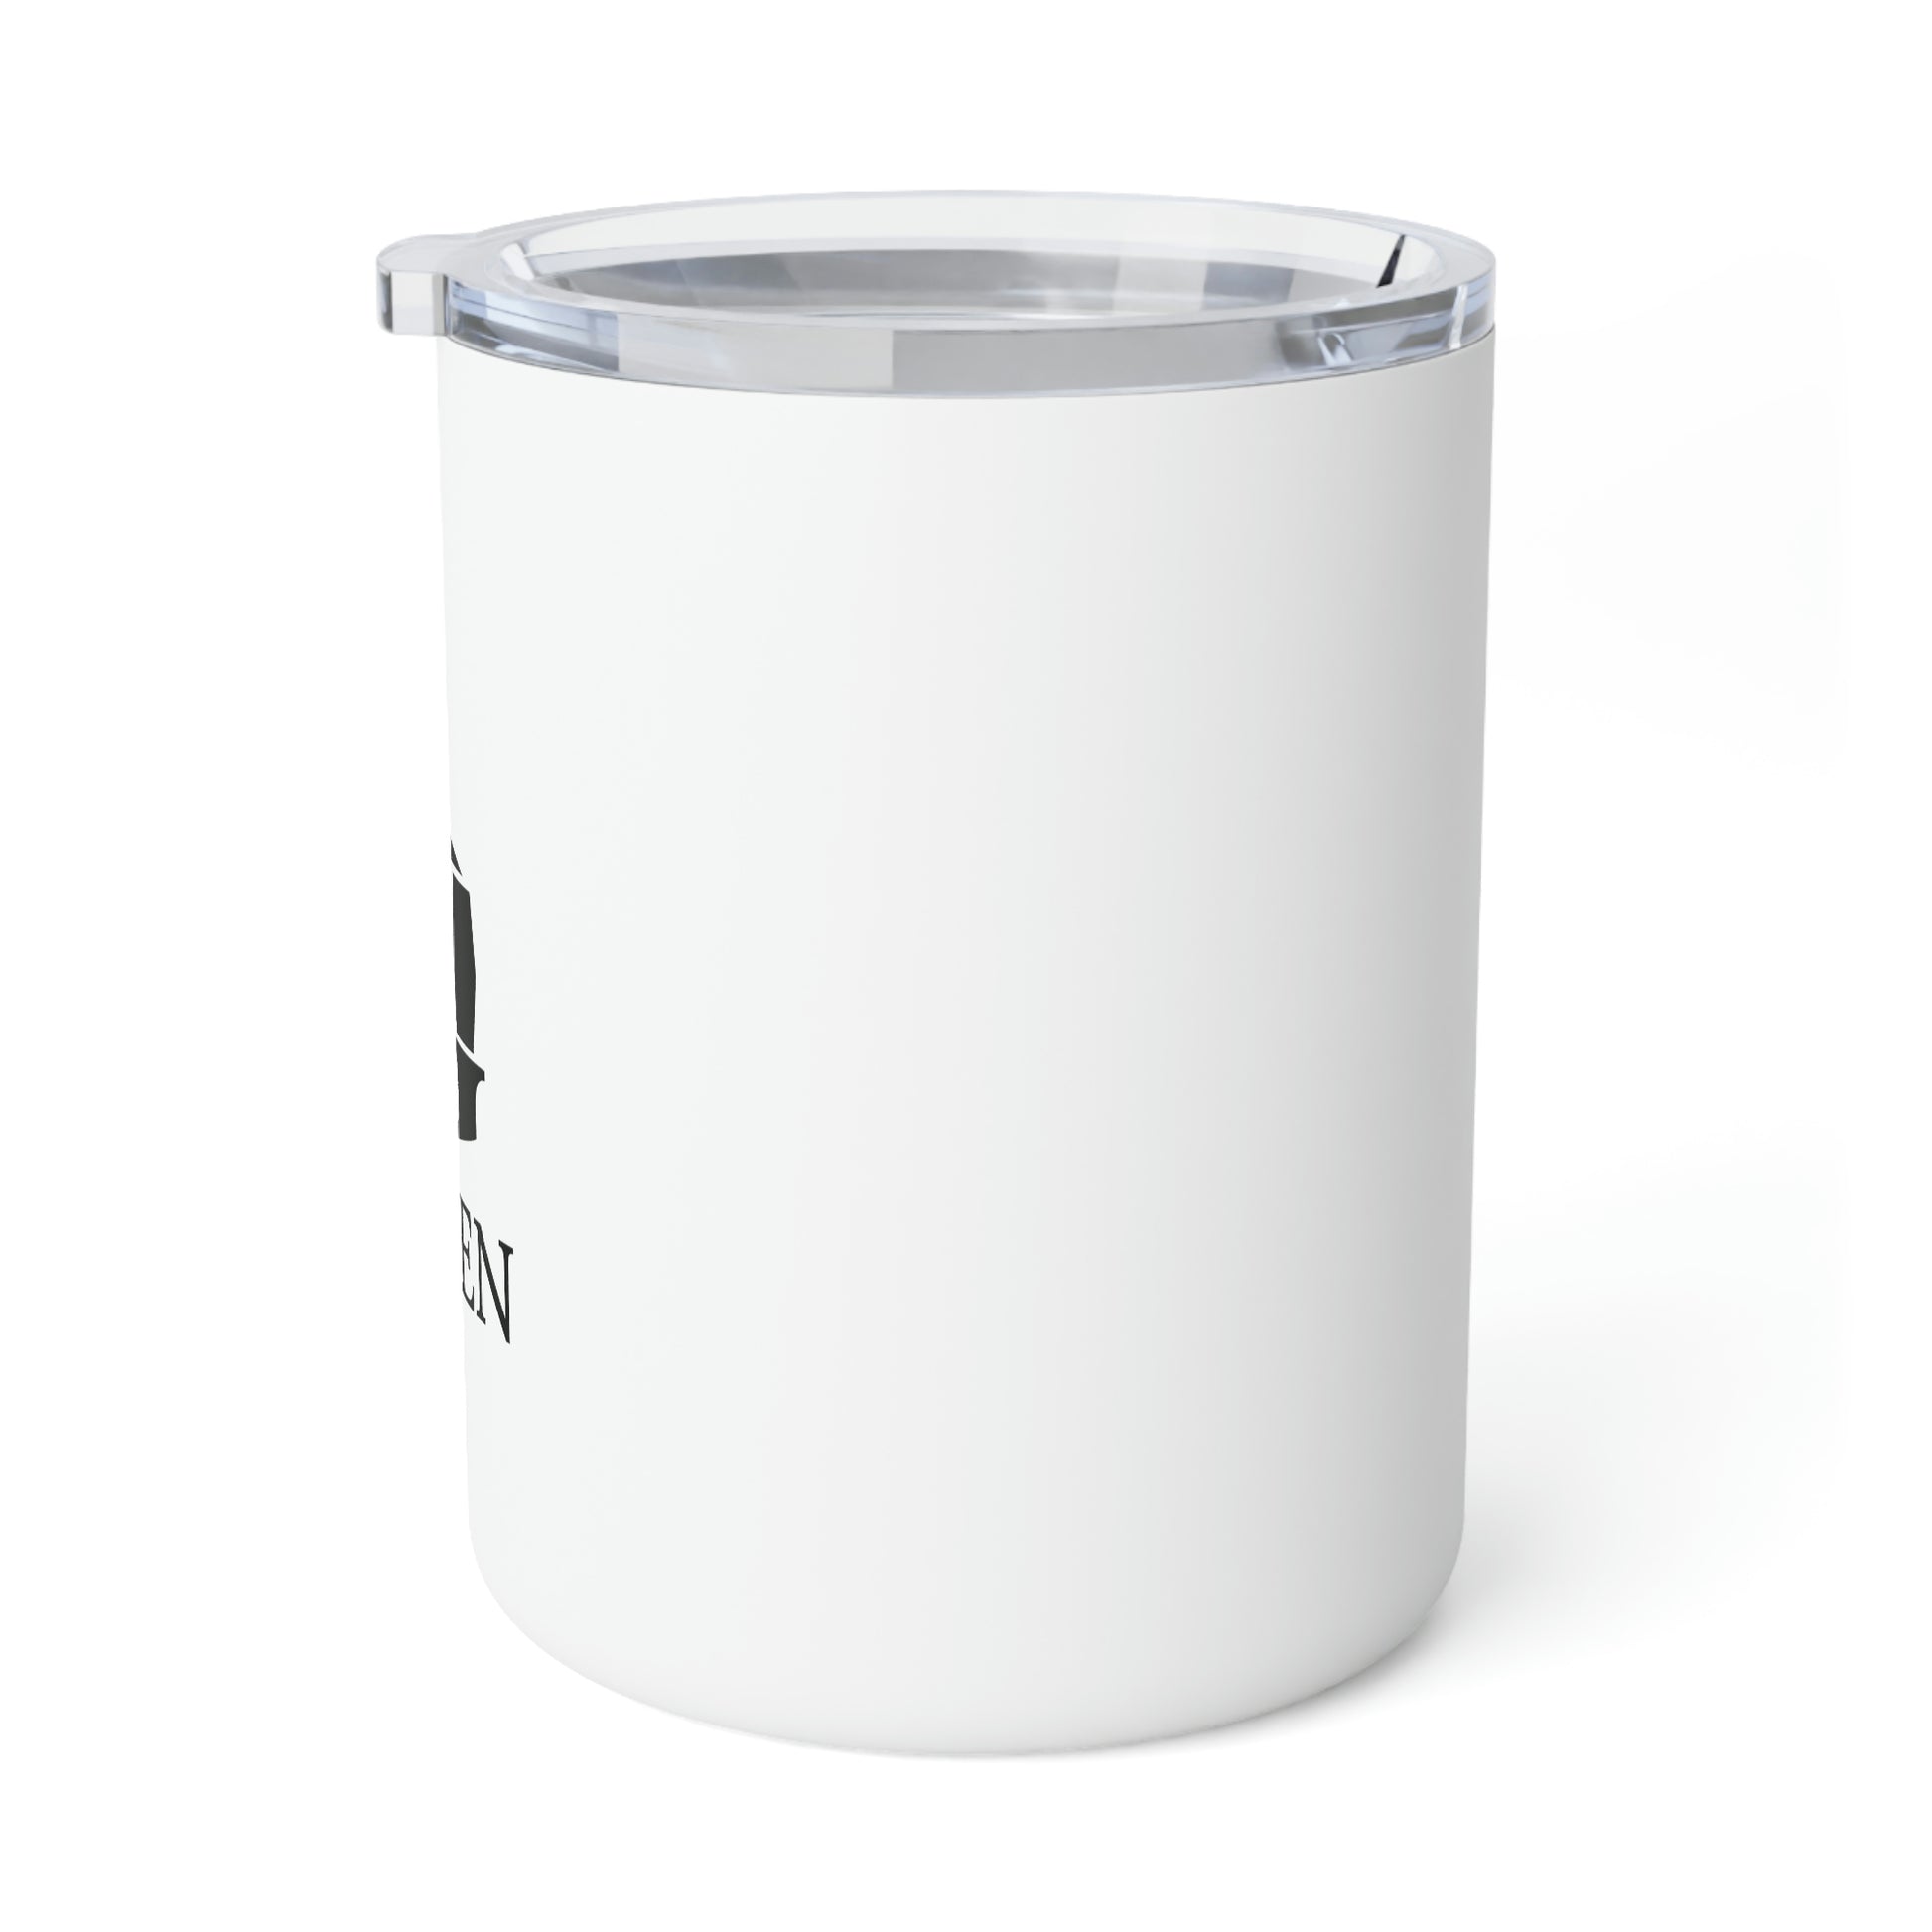 Insulated white Coffee Mug, 10oz with black Sig-Gen Logo